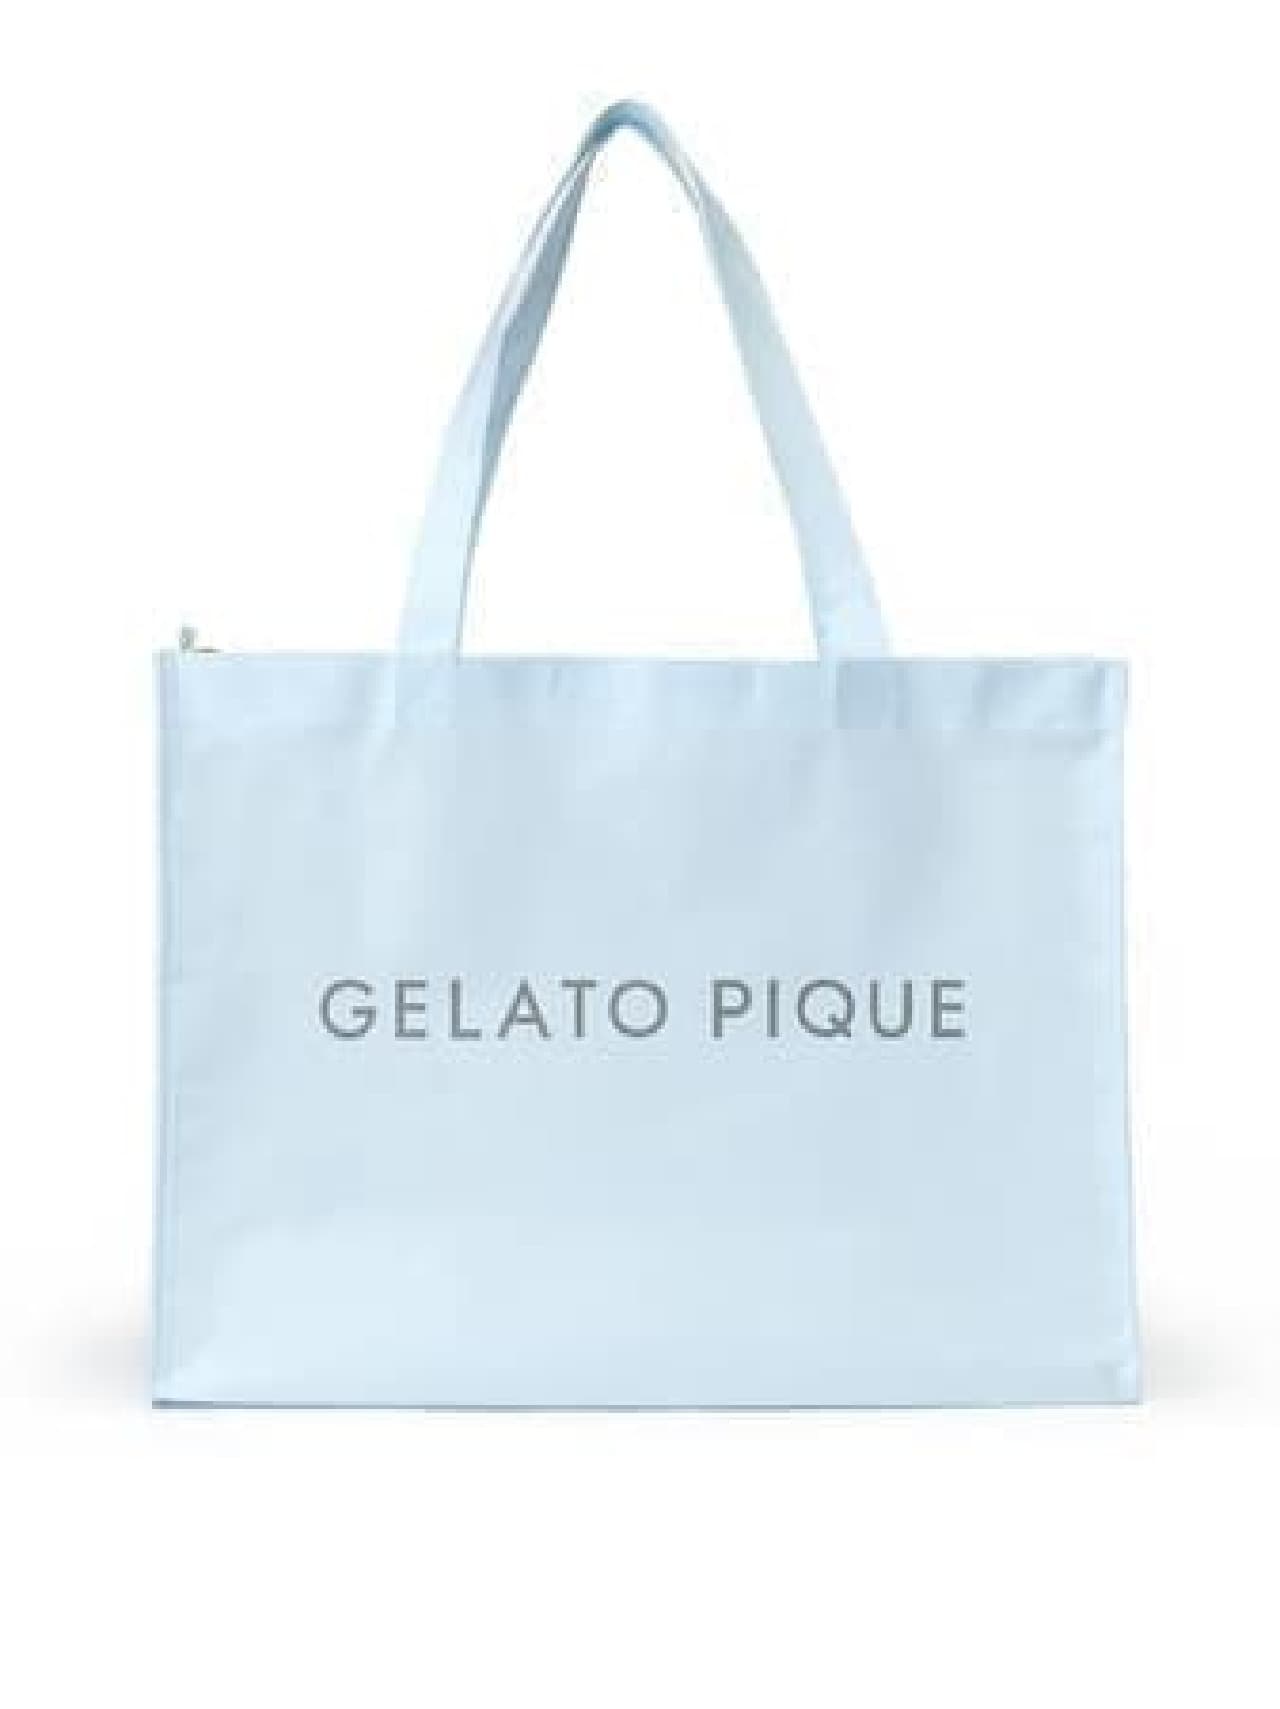 2021 lucky bag of gelato picket